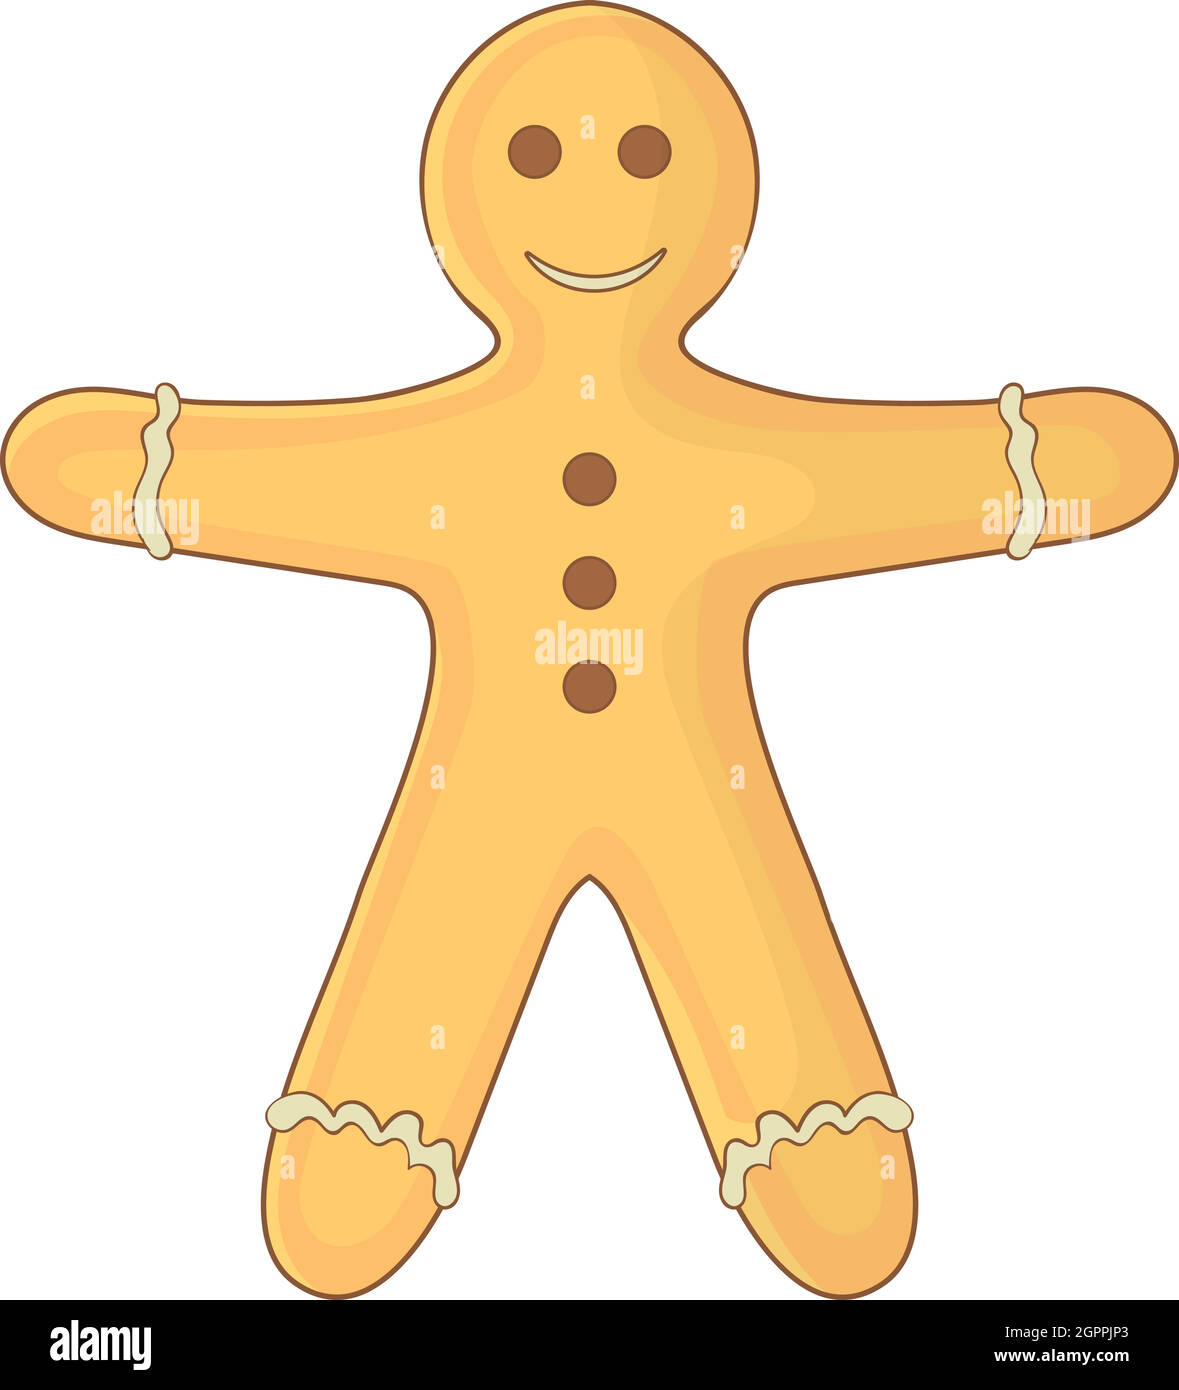 Gingerbread man icon, cartoon style Stock Vector